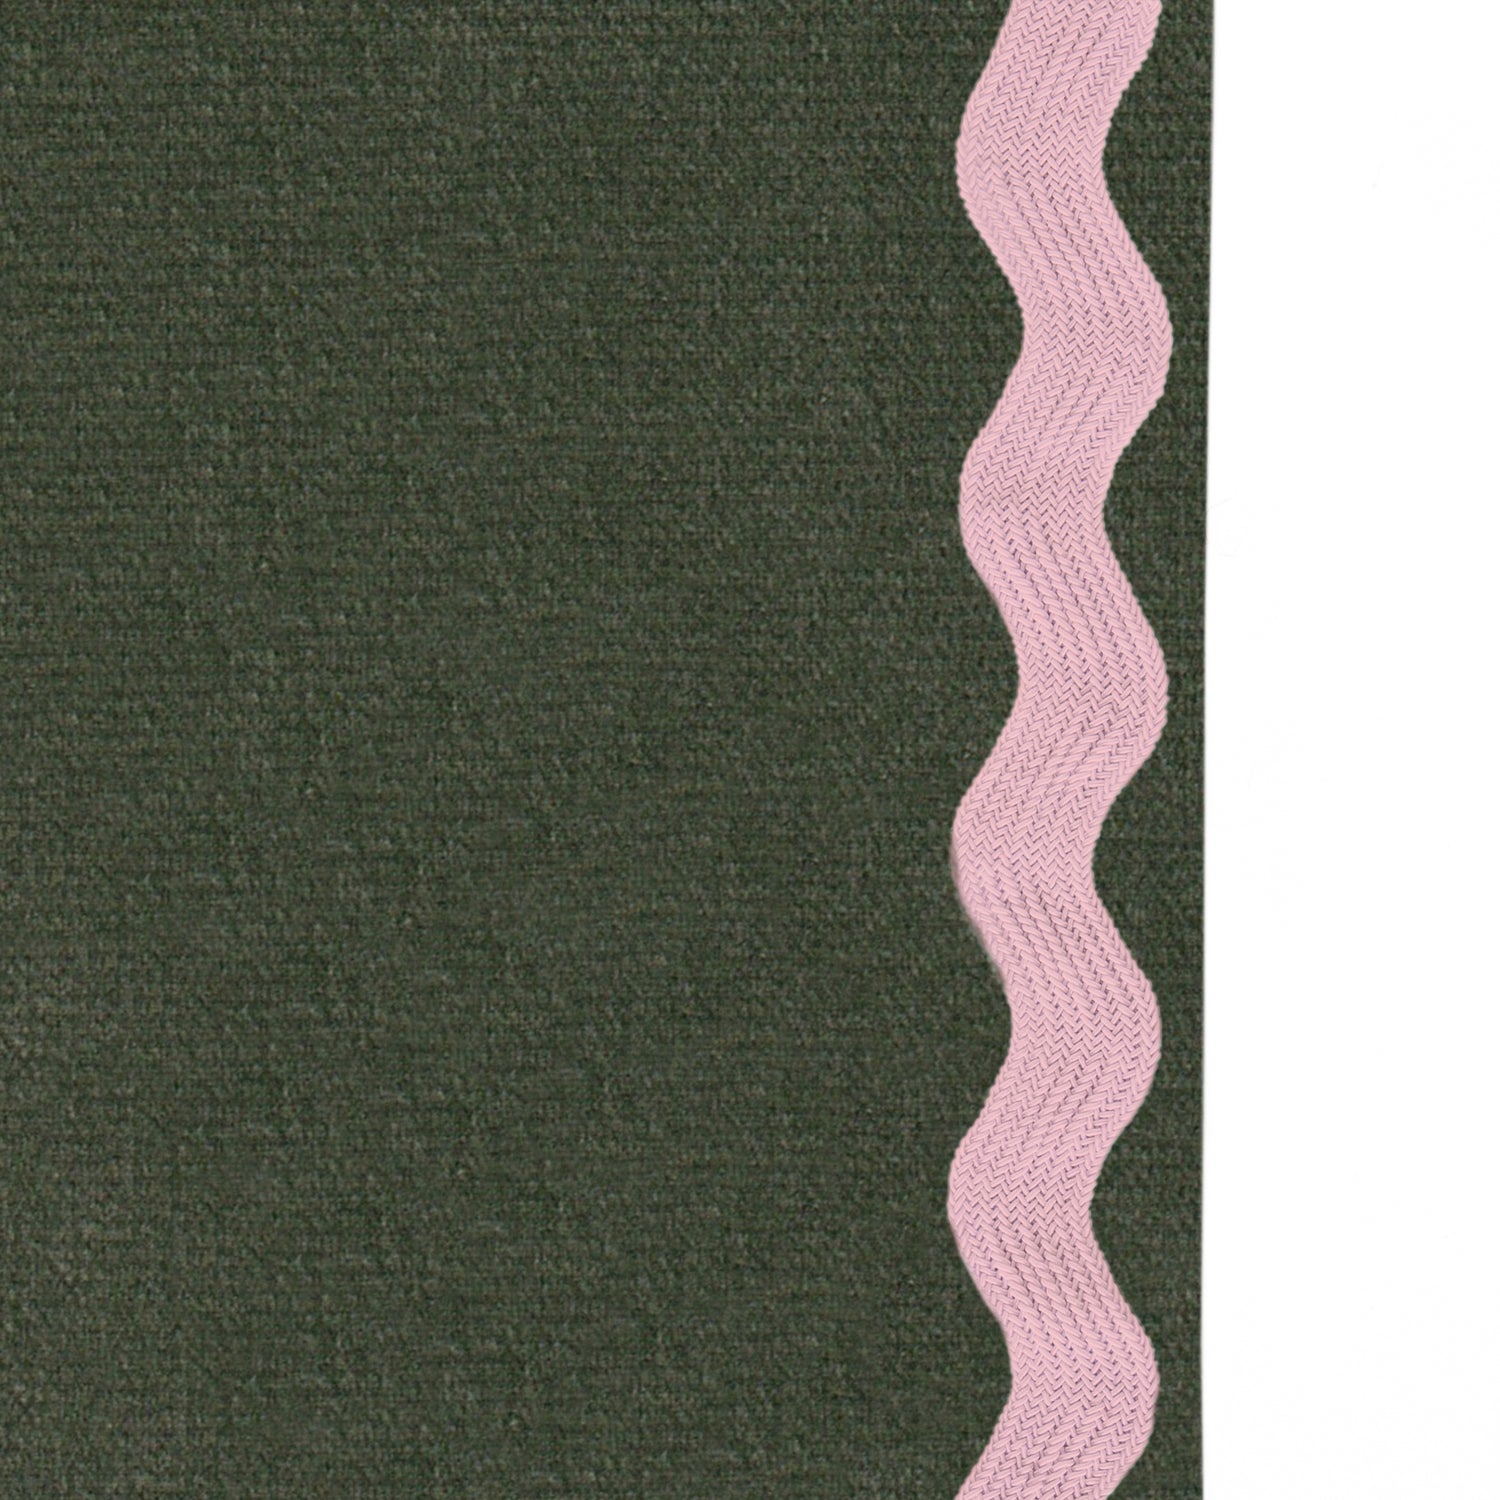 Upclose picture of Fern Velvet custom Fern Greencurtain with peony rick rack trim